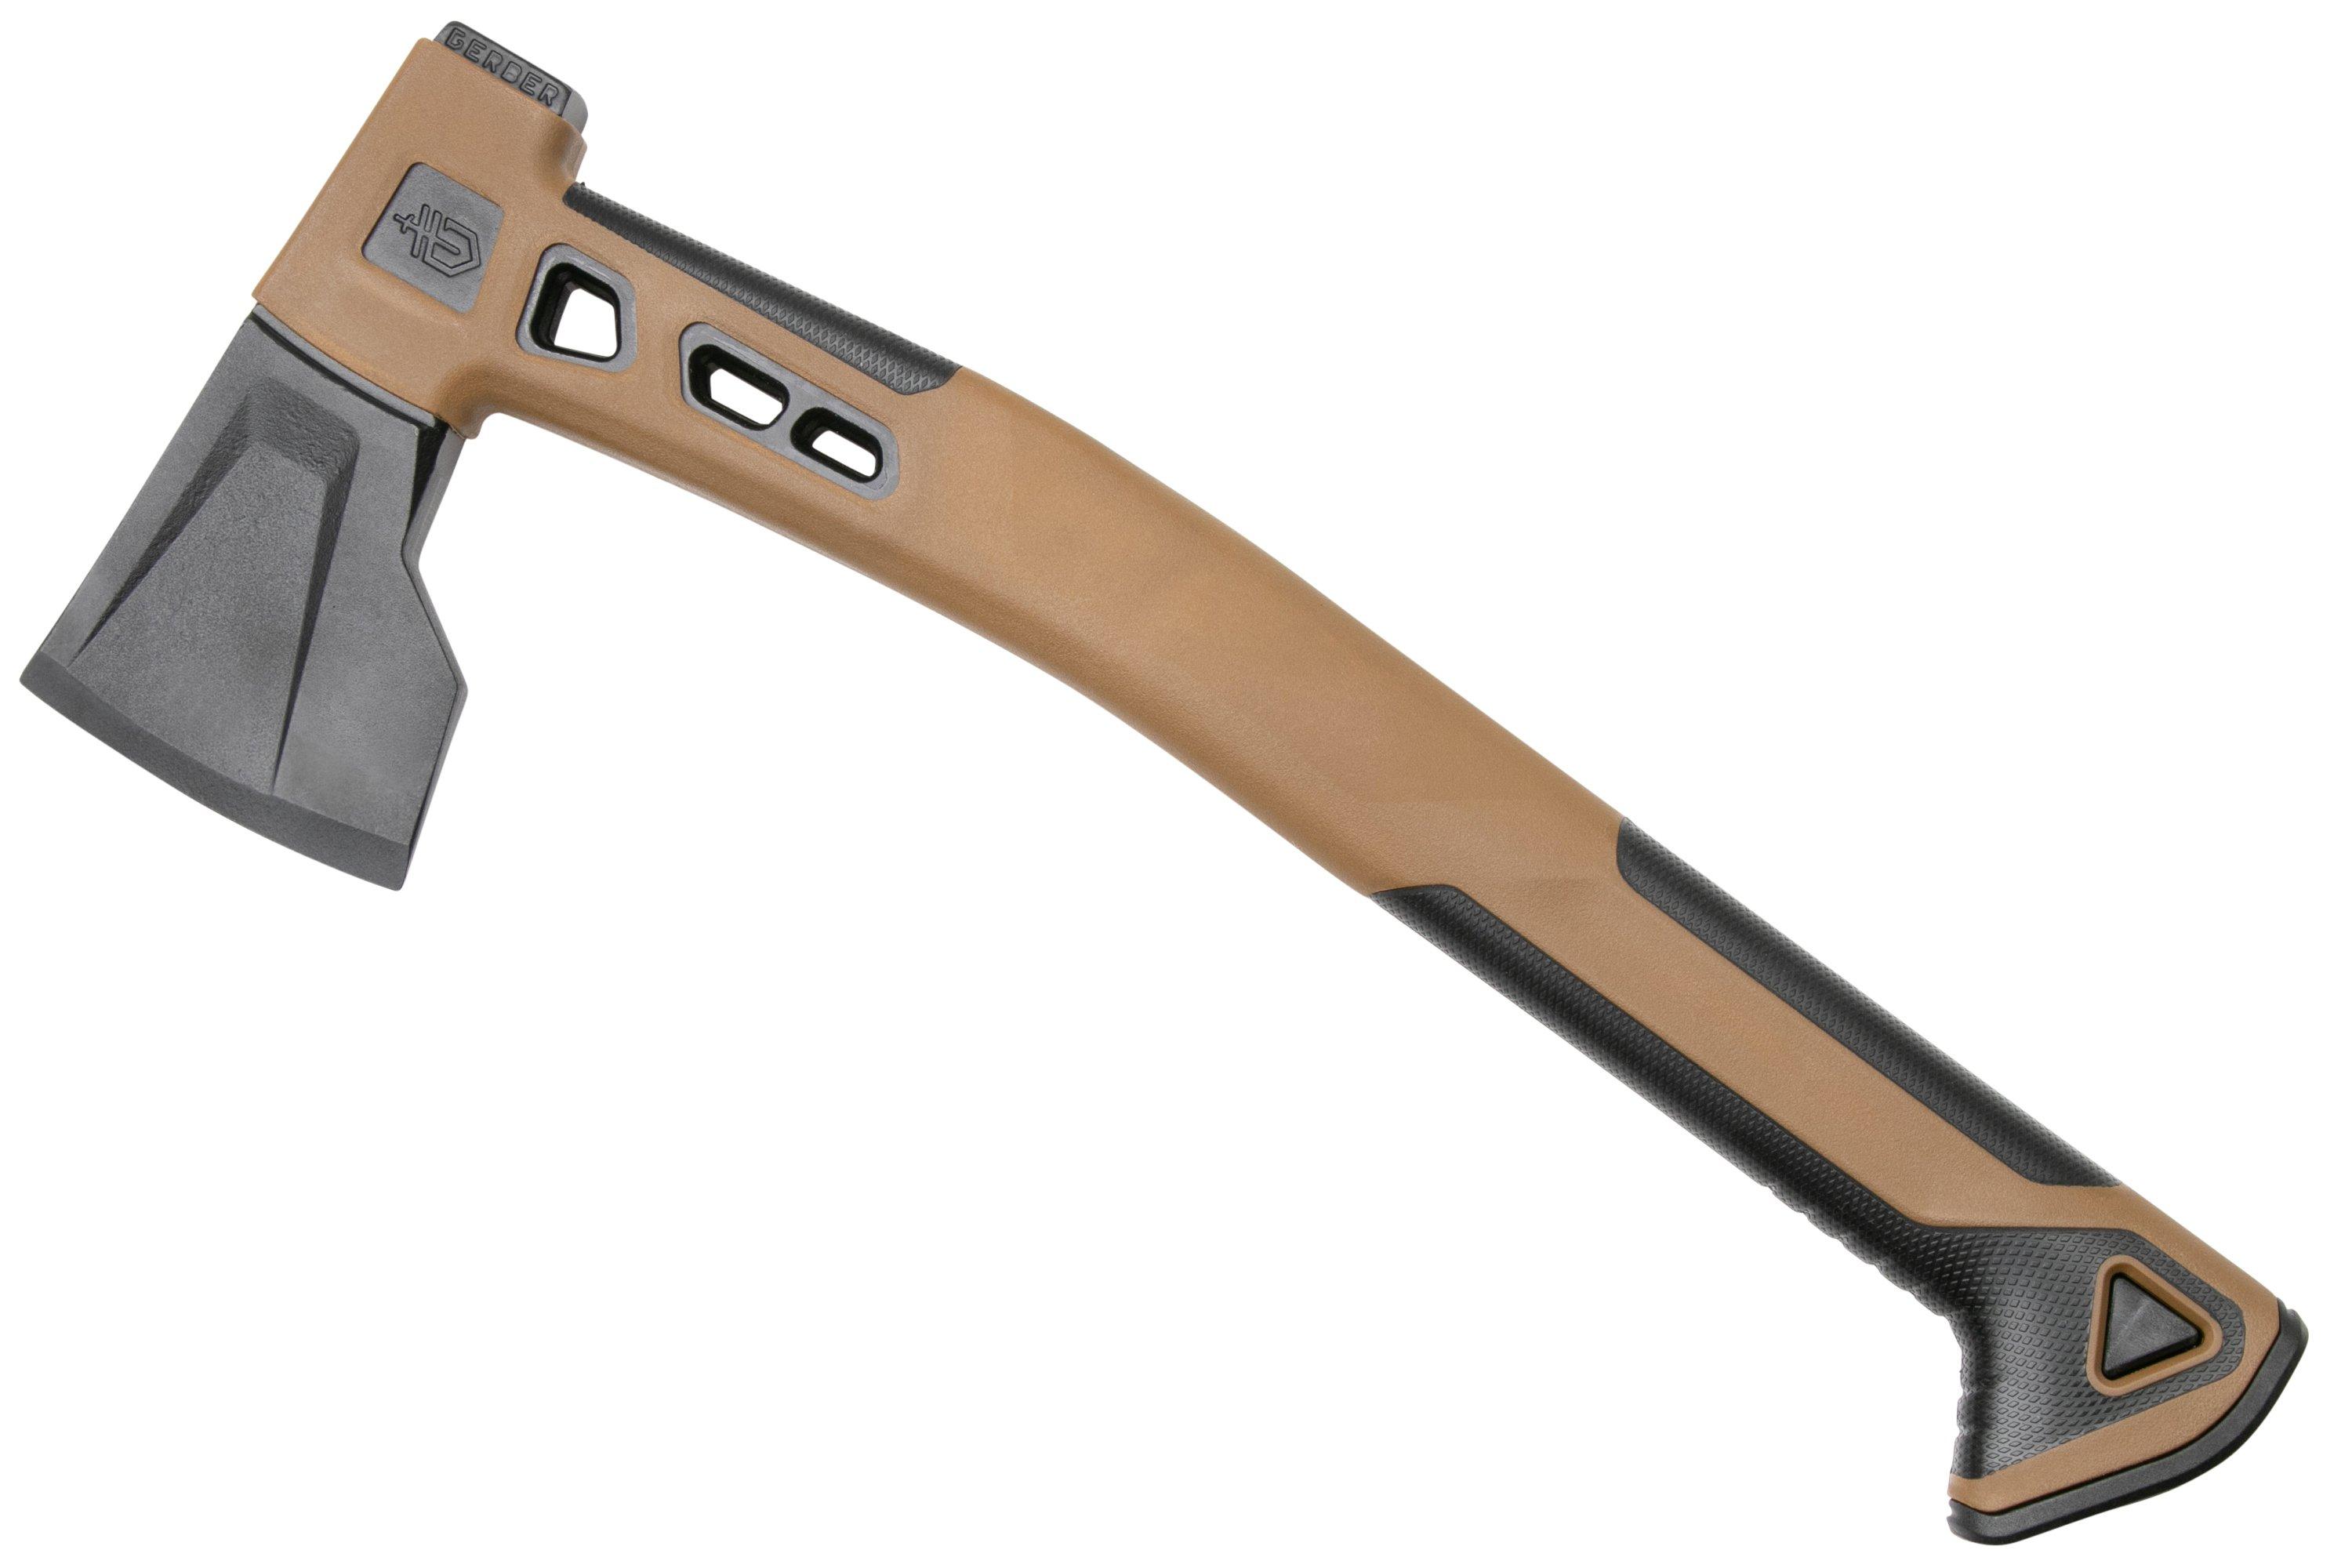 Gerber Bushcraft Hatchet, 31-003783, hand axe for bushcraft | Advantageously at Knivesandtools.com